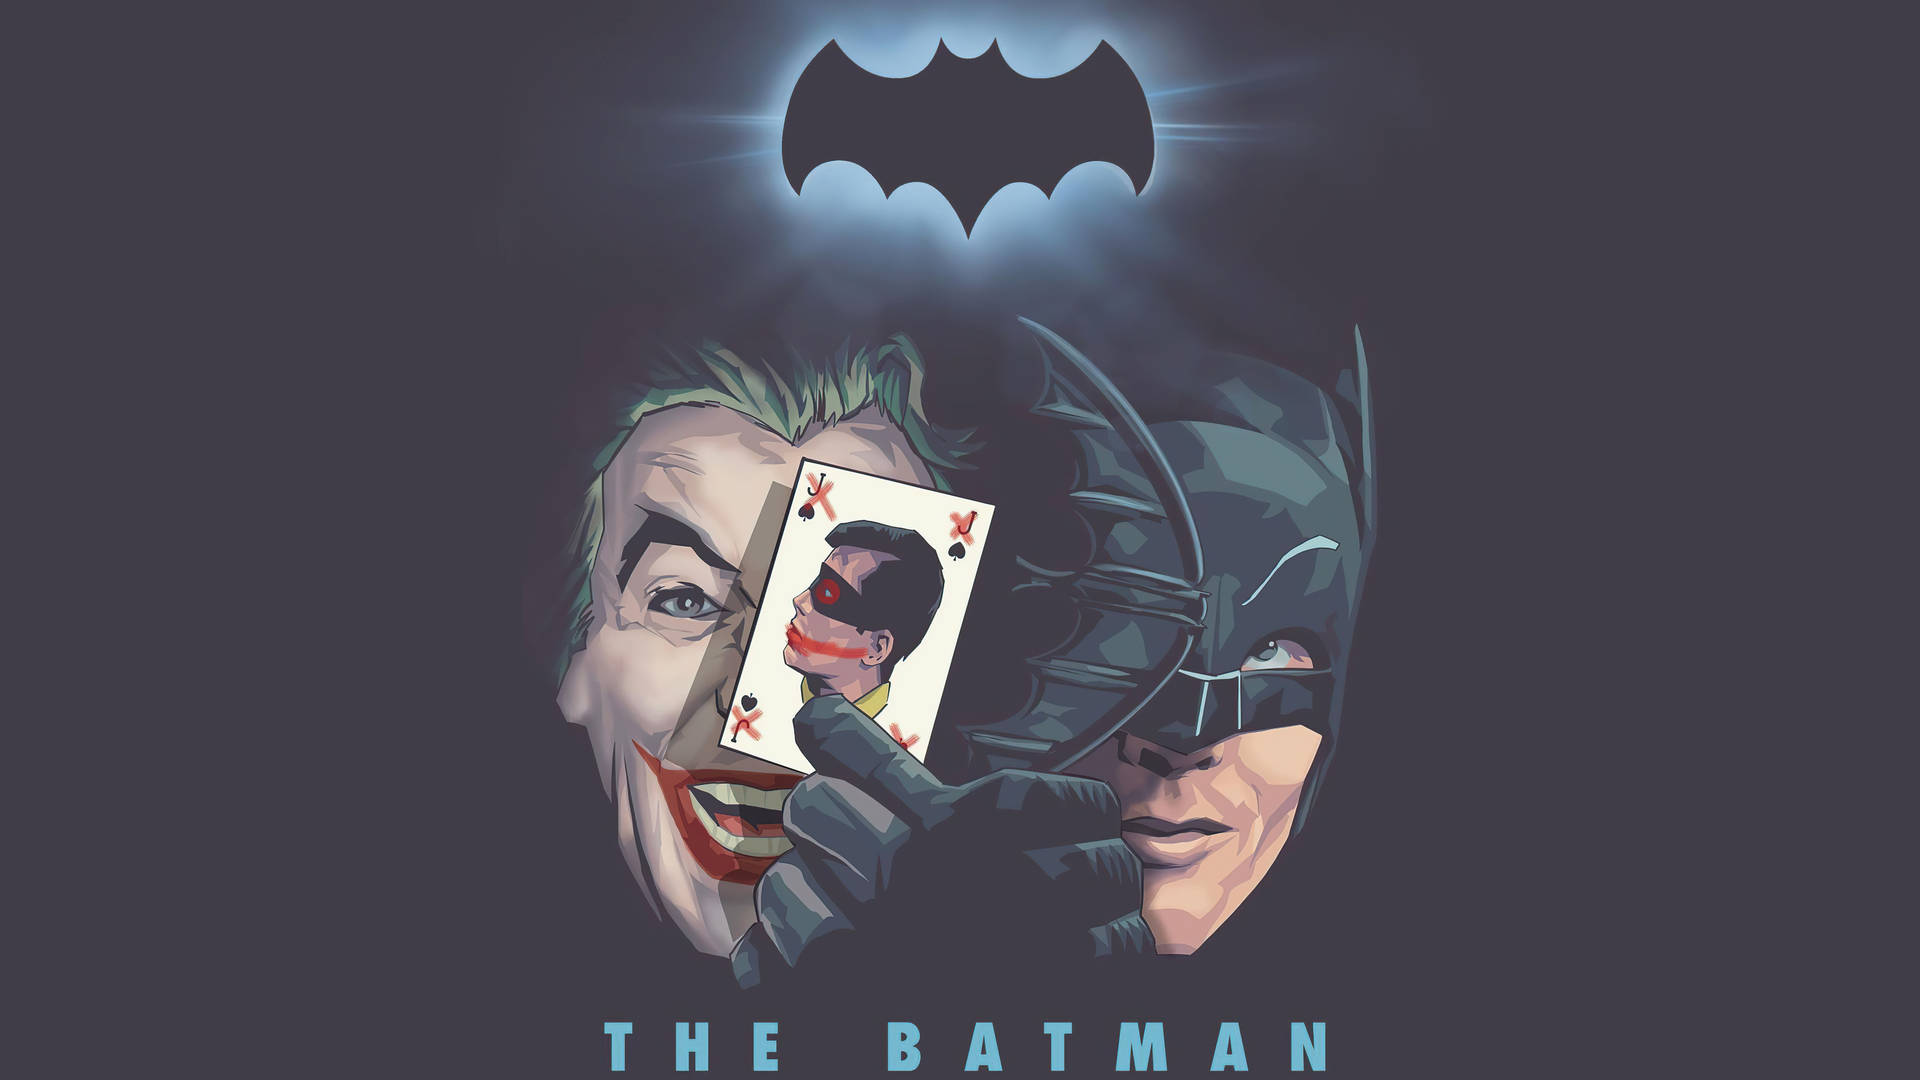 Classic Black Ultra Hd Joker And Batman Poster Background